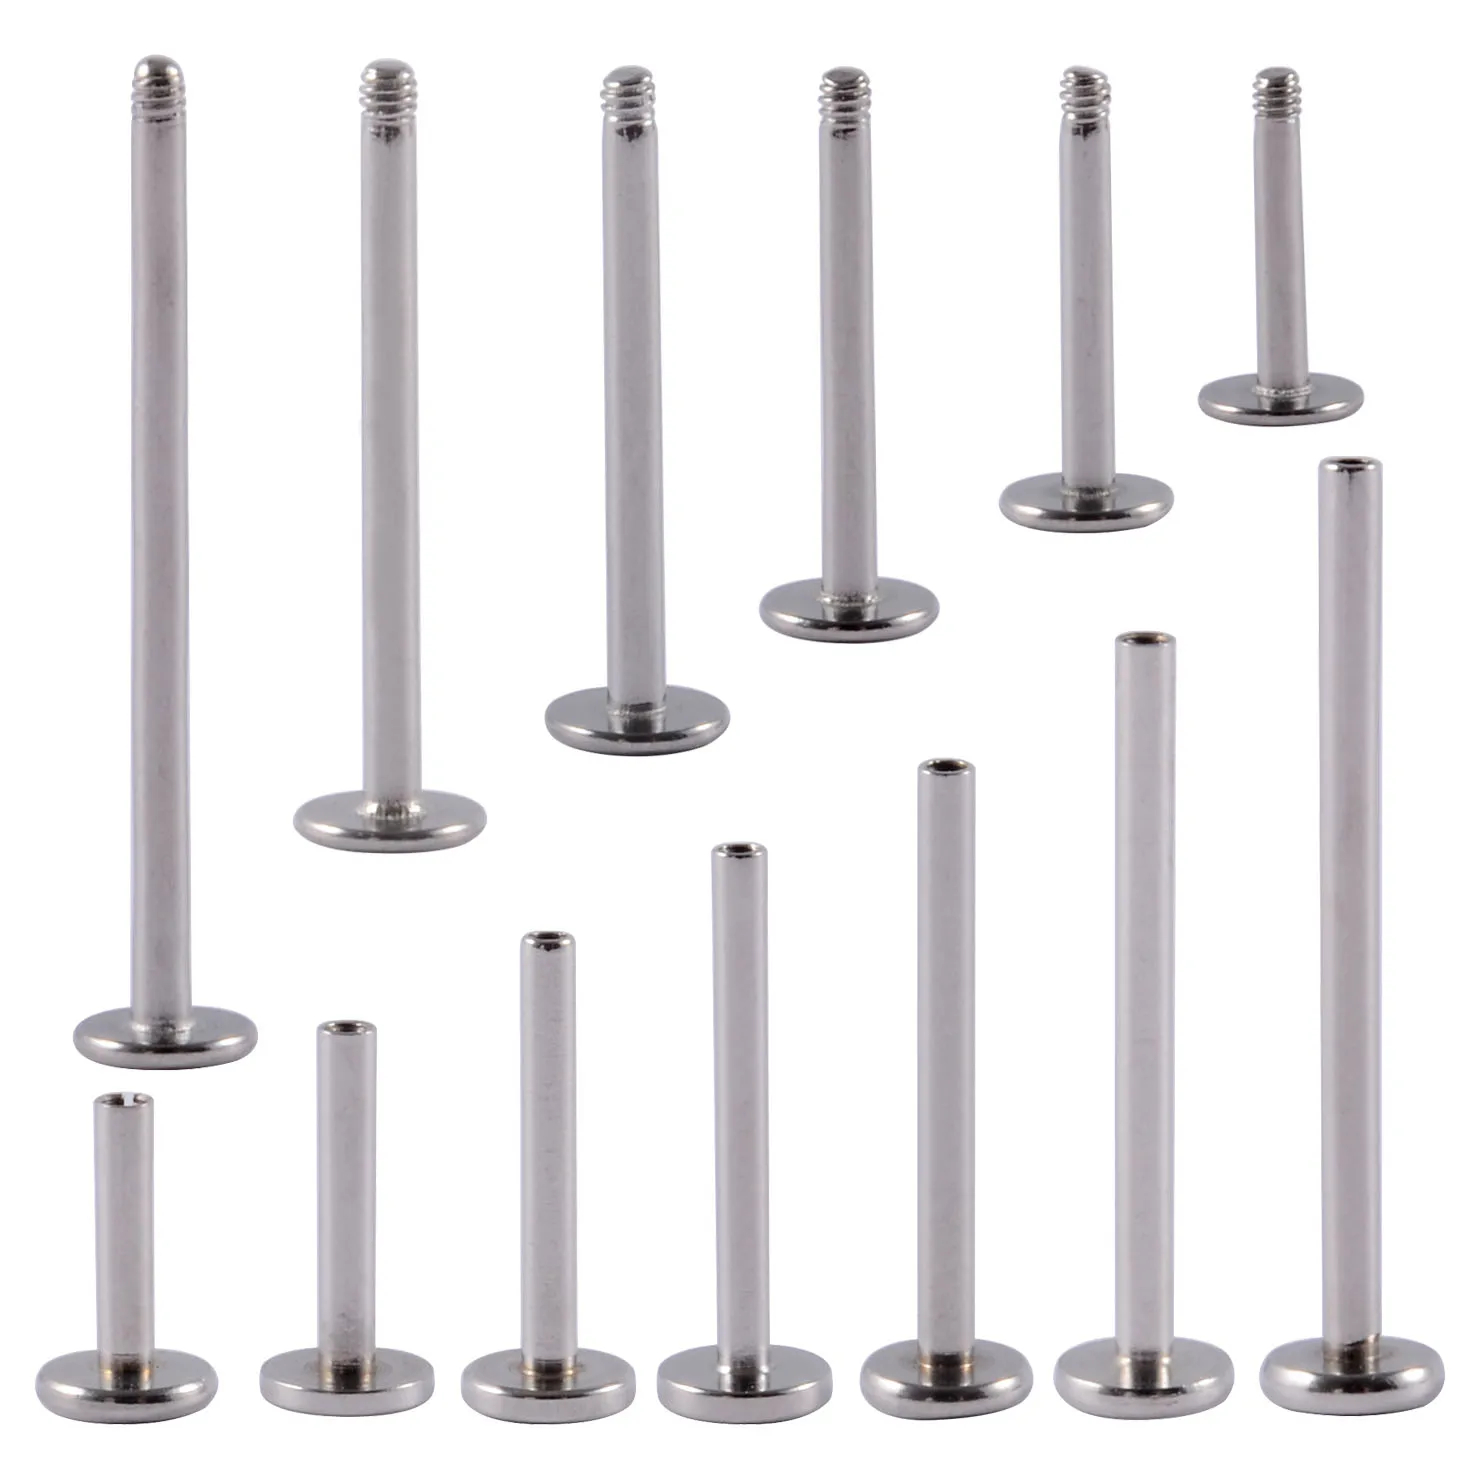 10PCS/Lot Steel & Titanium Lip Bar Parts Screw Thread 16G/14G Labret Post Barbells For Lip Piercing Earring Stud Body Jewelry